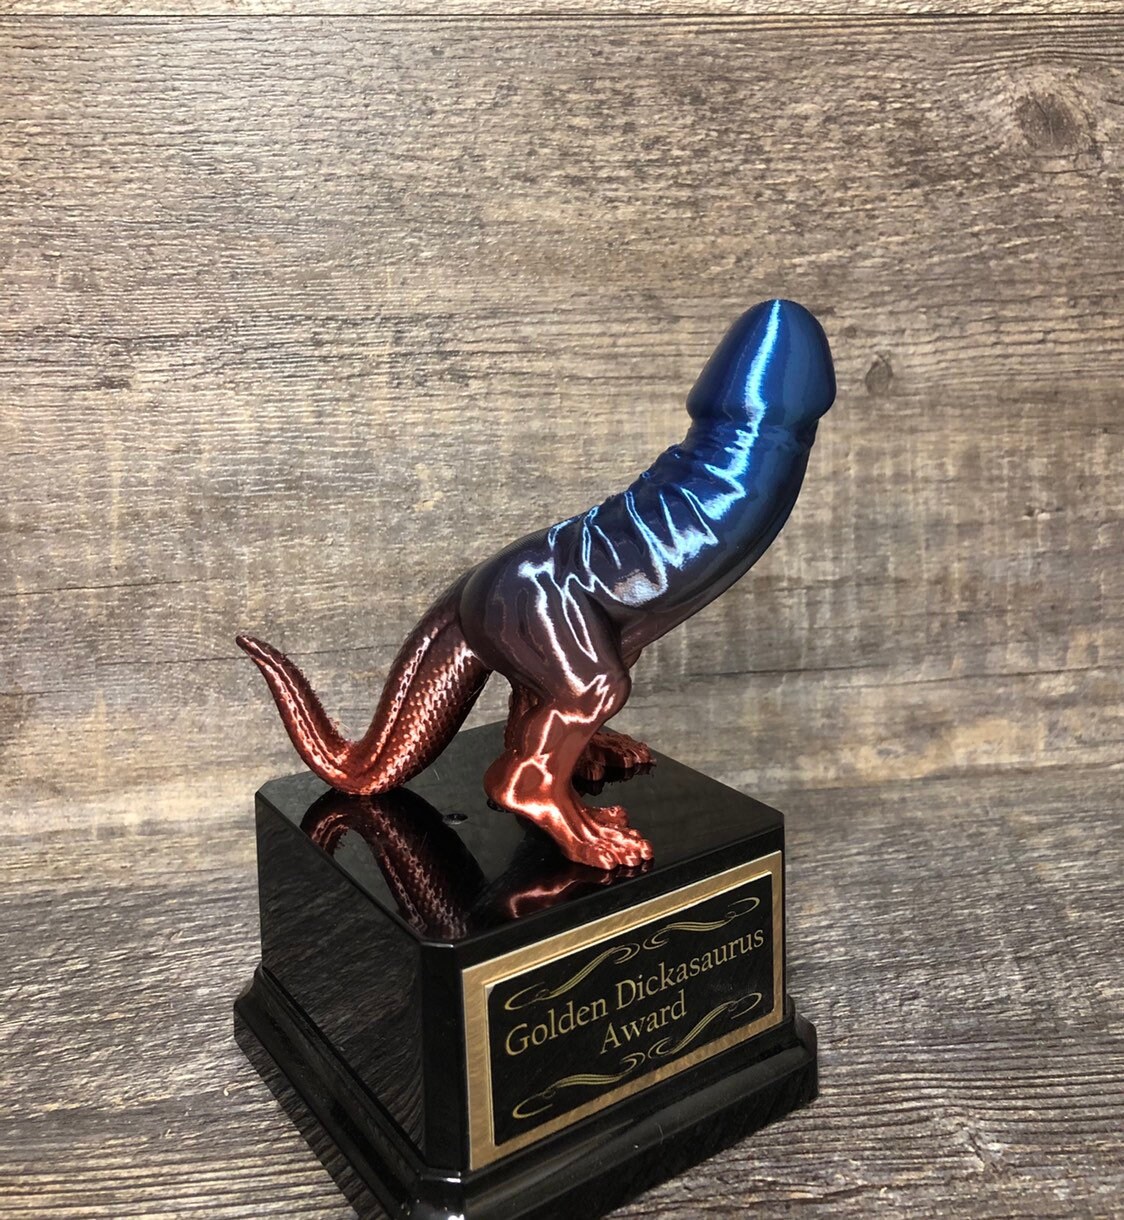 Dickasaurus Funny Trophy Award Youre A Dick Fantasy Etsy 